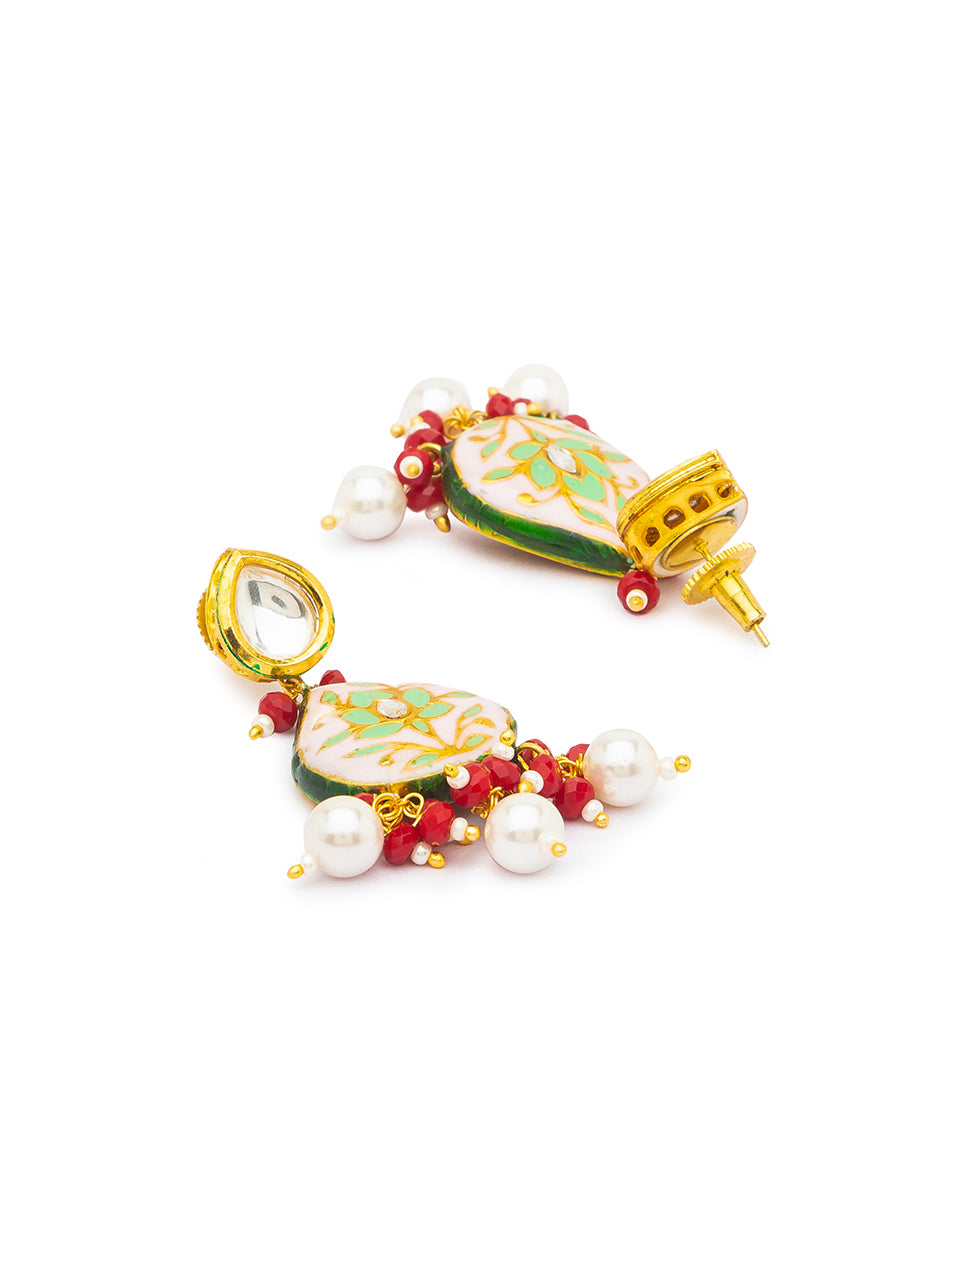 Micron Gold Polished Earring with Kundan Polki, Meenakari & Shell Pearls